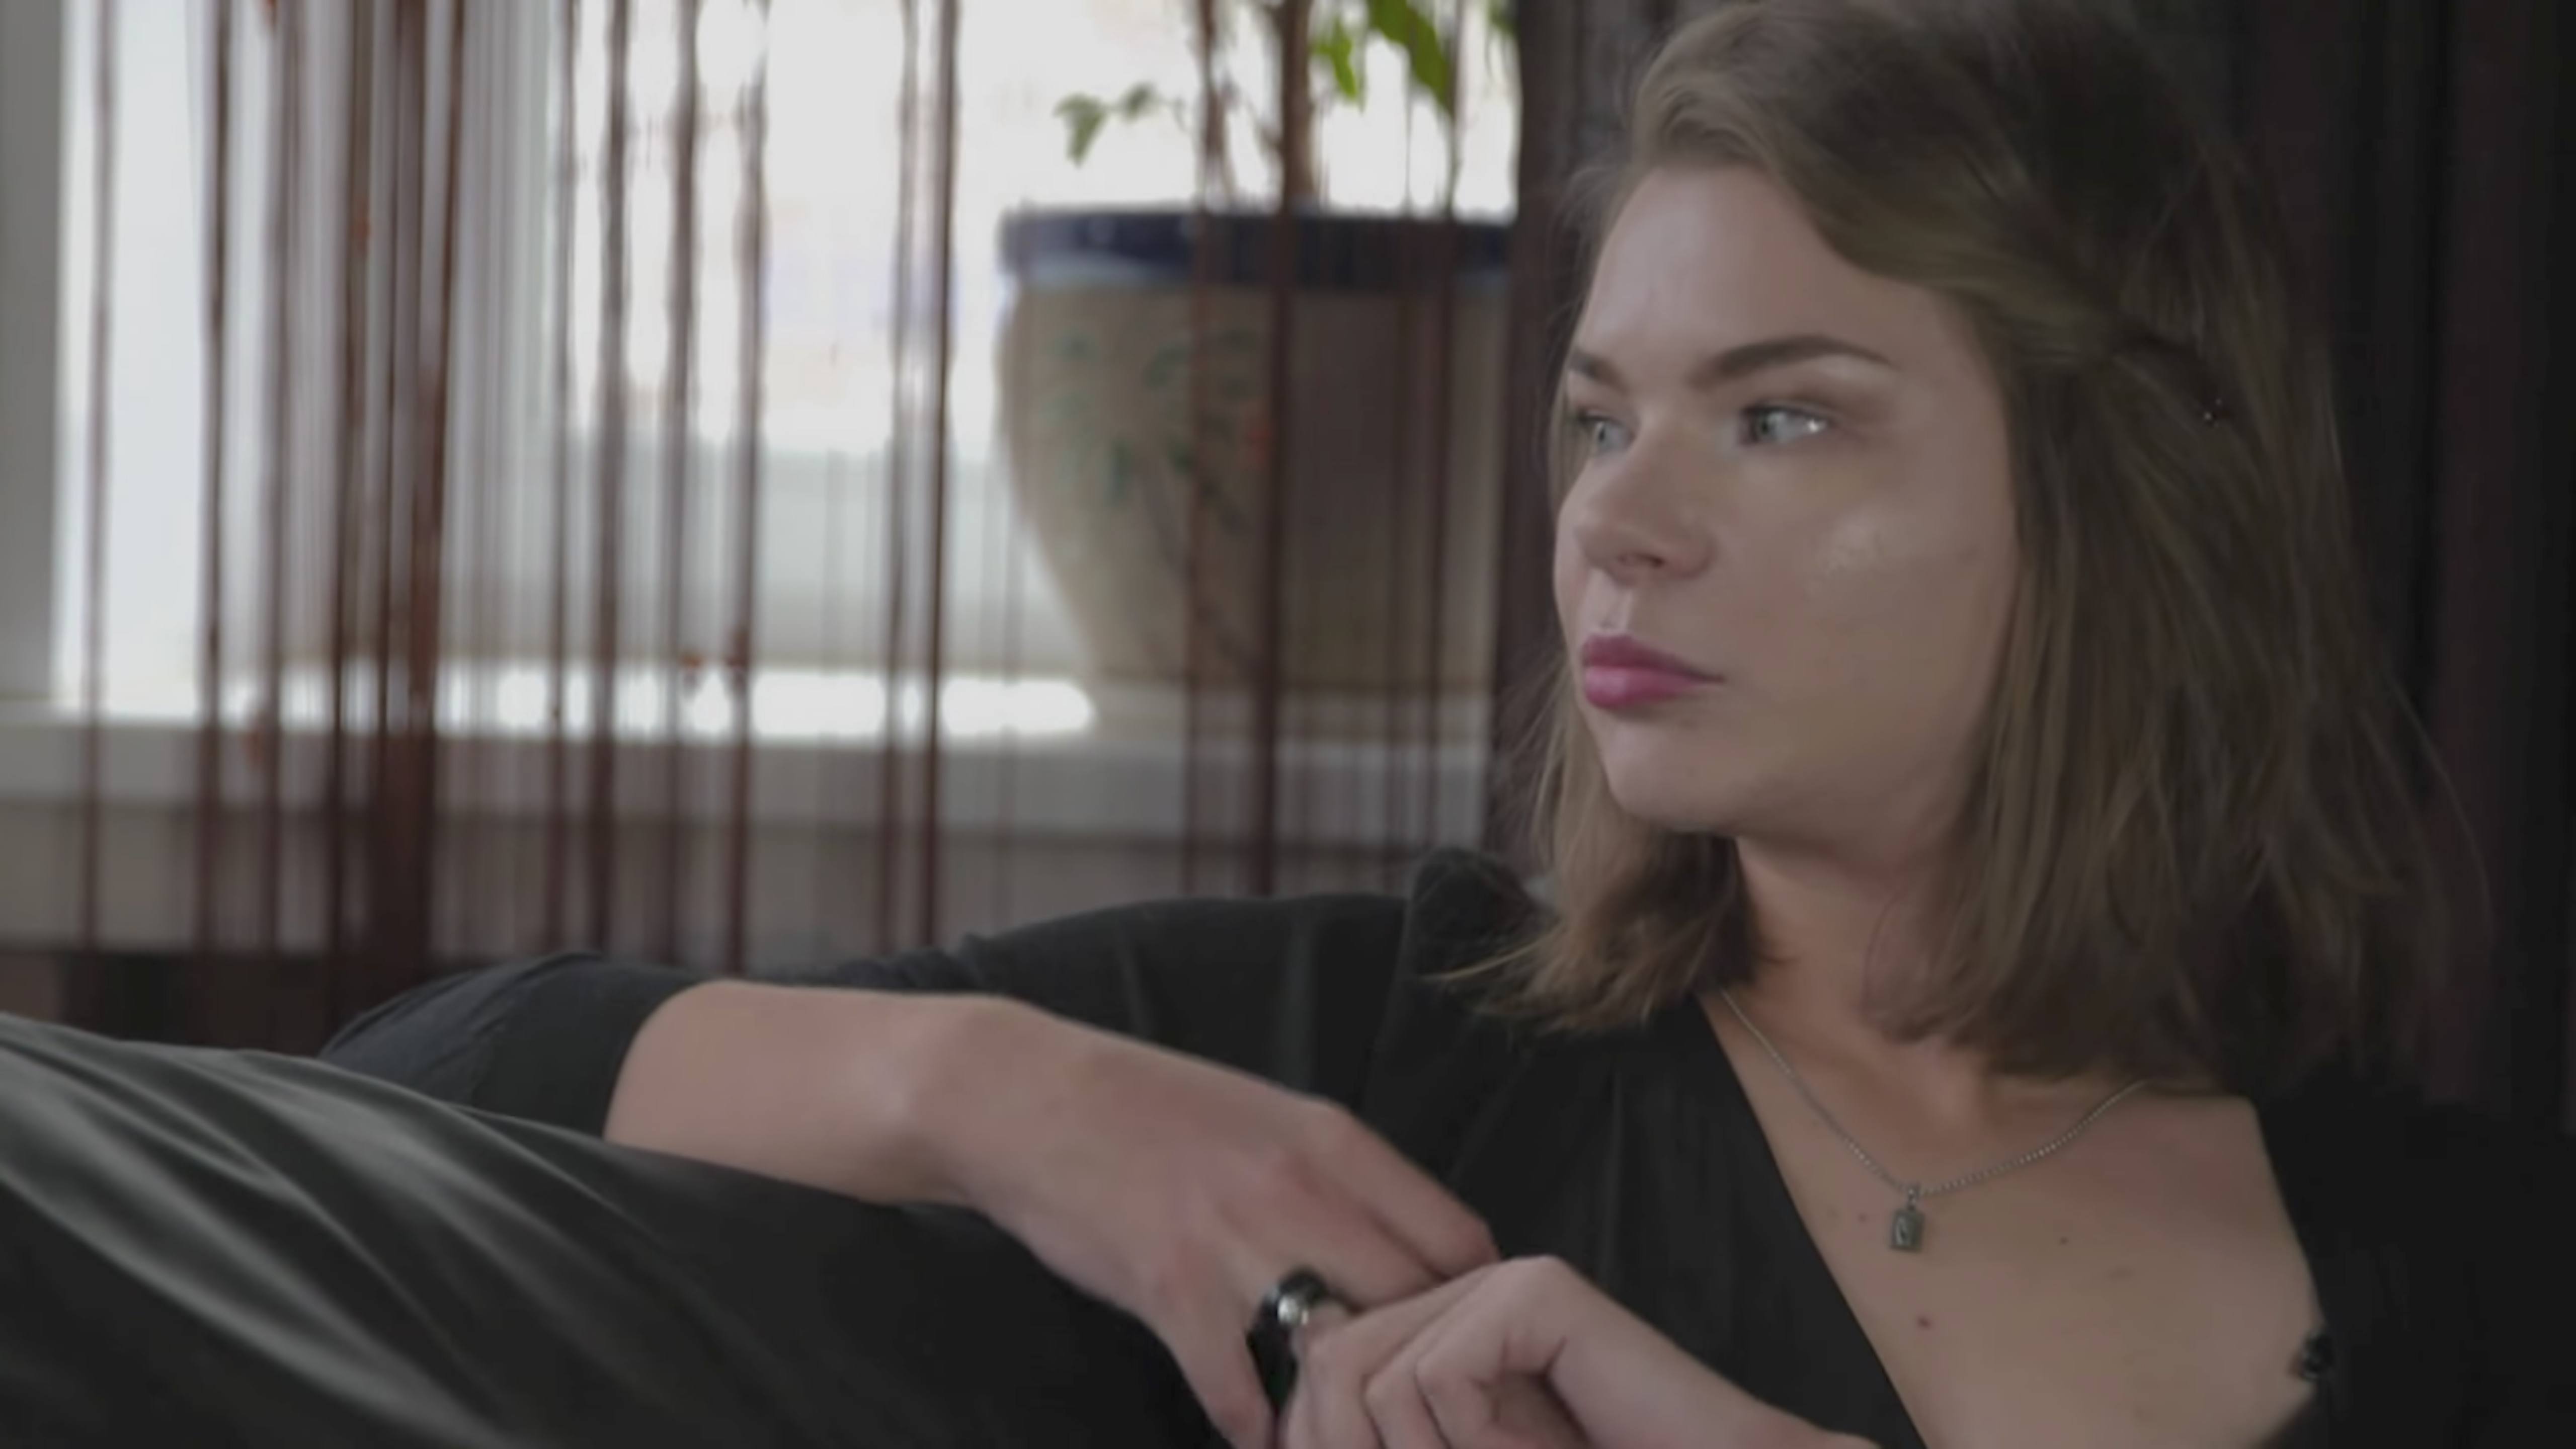 Anna Zhavnerovich spoke with Nick Schifrin about domestic violence in Russia. Still from video. Russia, 2017.